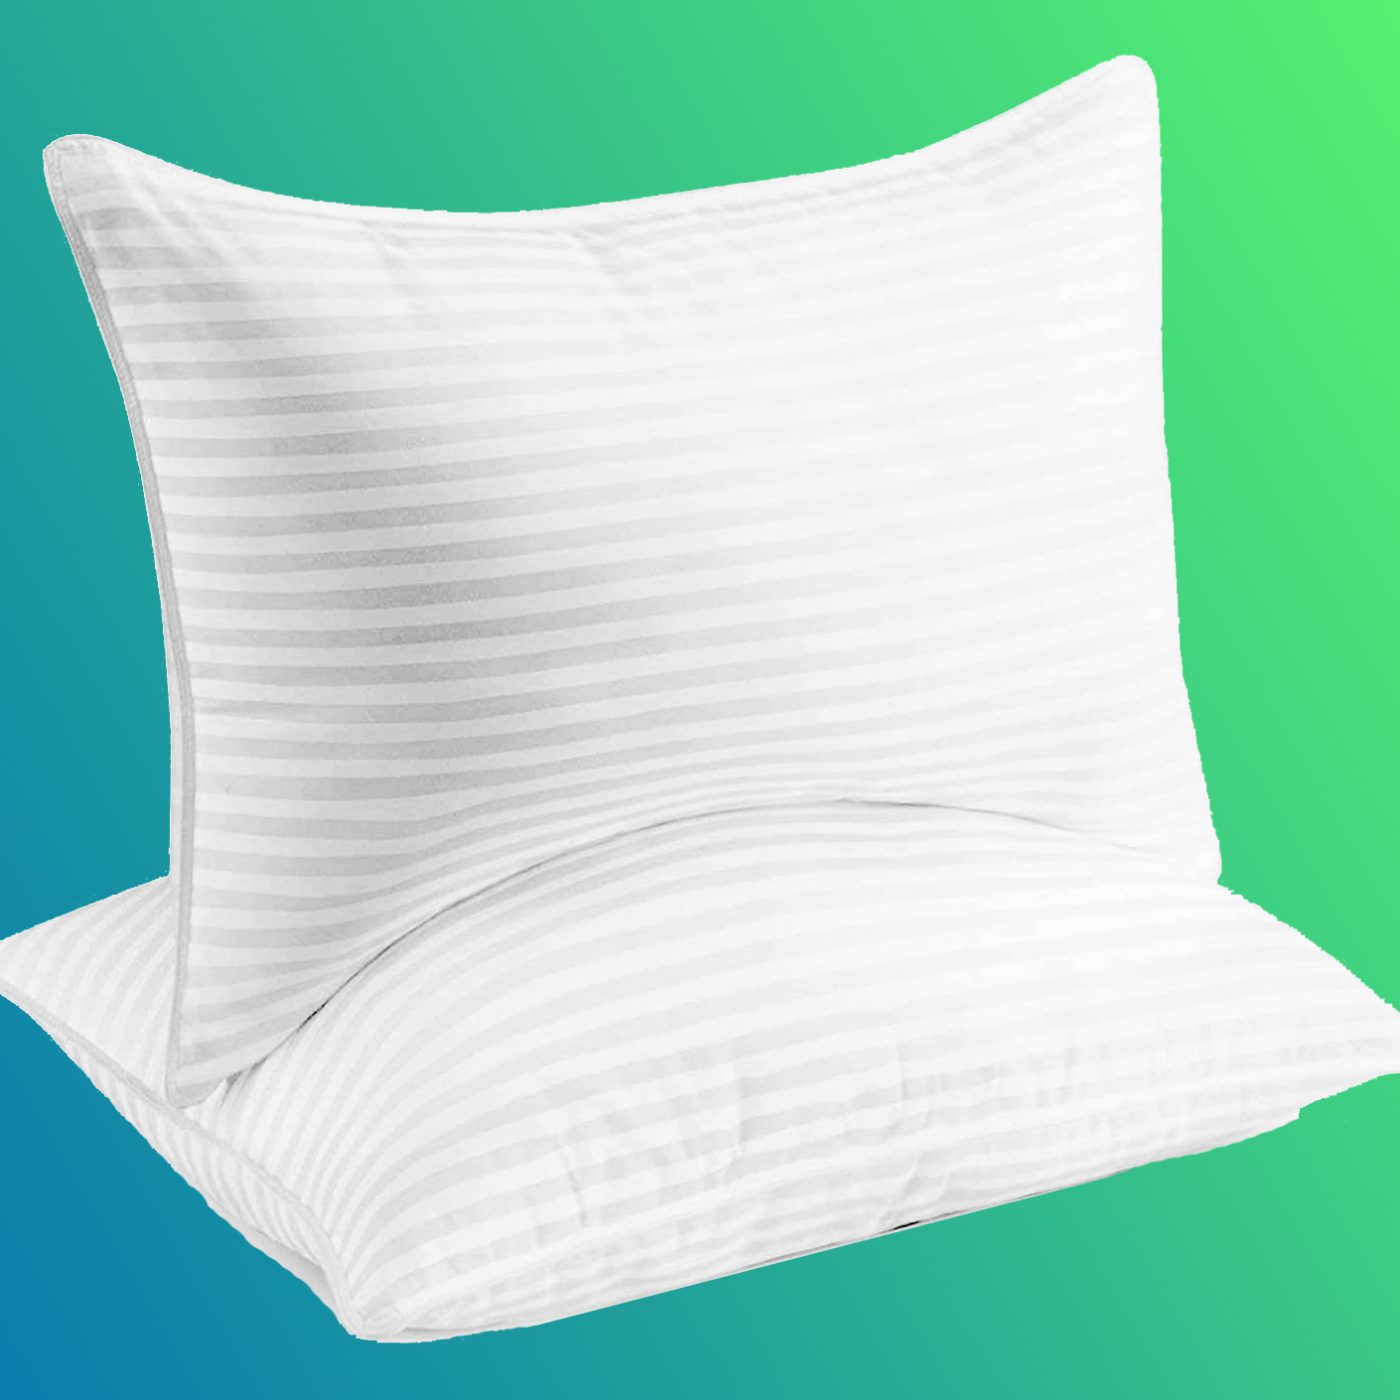 https://bgr.com/wp-content/uploads/2022/03/beckham-hotel-collection-bed-pillows.jpg?quality=82&strip=all&resize=1400,1400